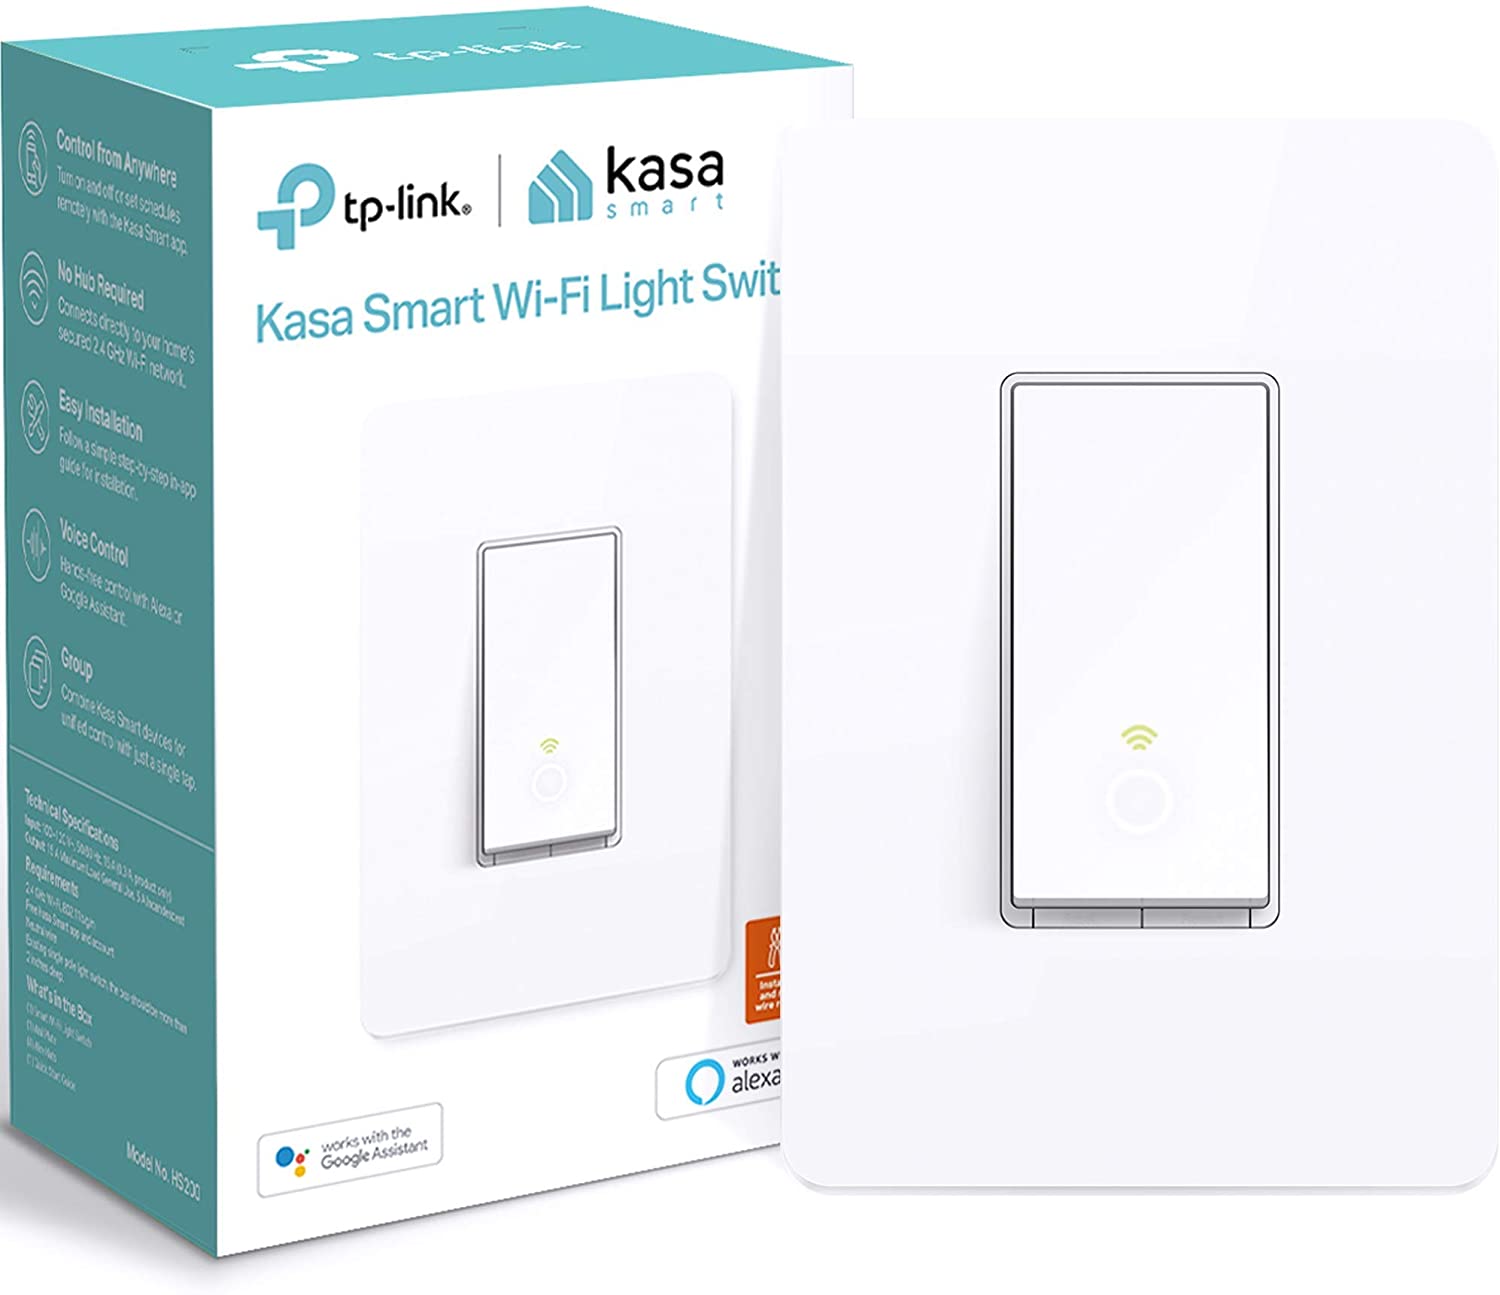 TP-Link Kasa Smart WiFi Light Switch HS200 + 15% back for Prime cardholders - $9.99 AC + FS w/ Prime